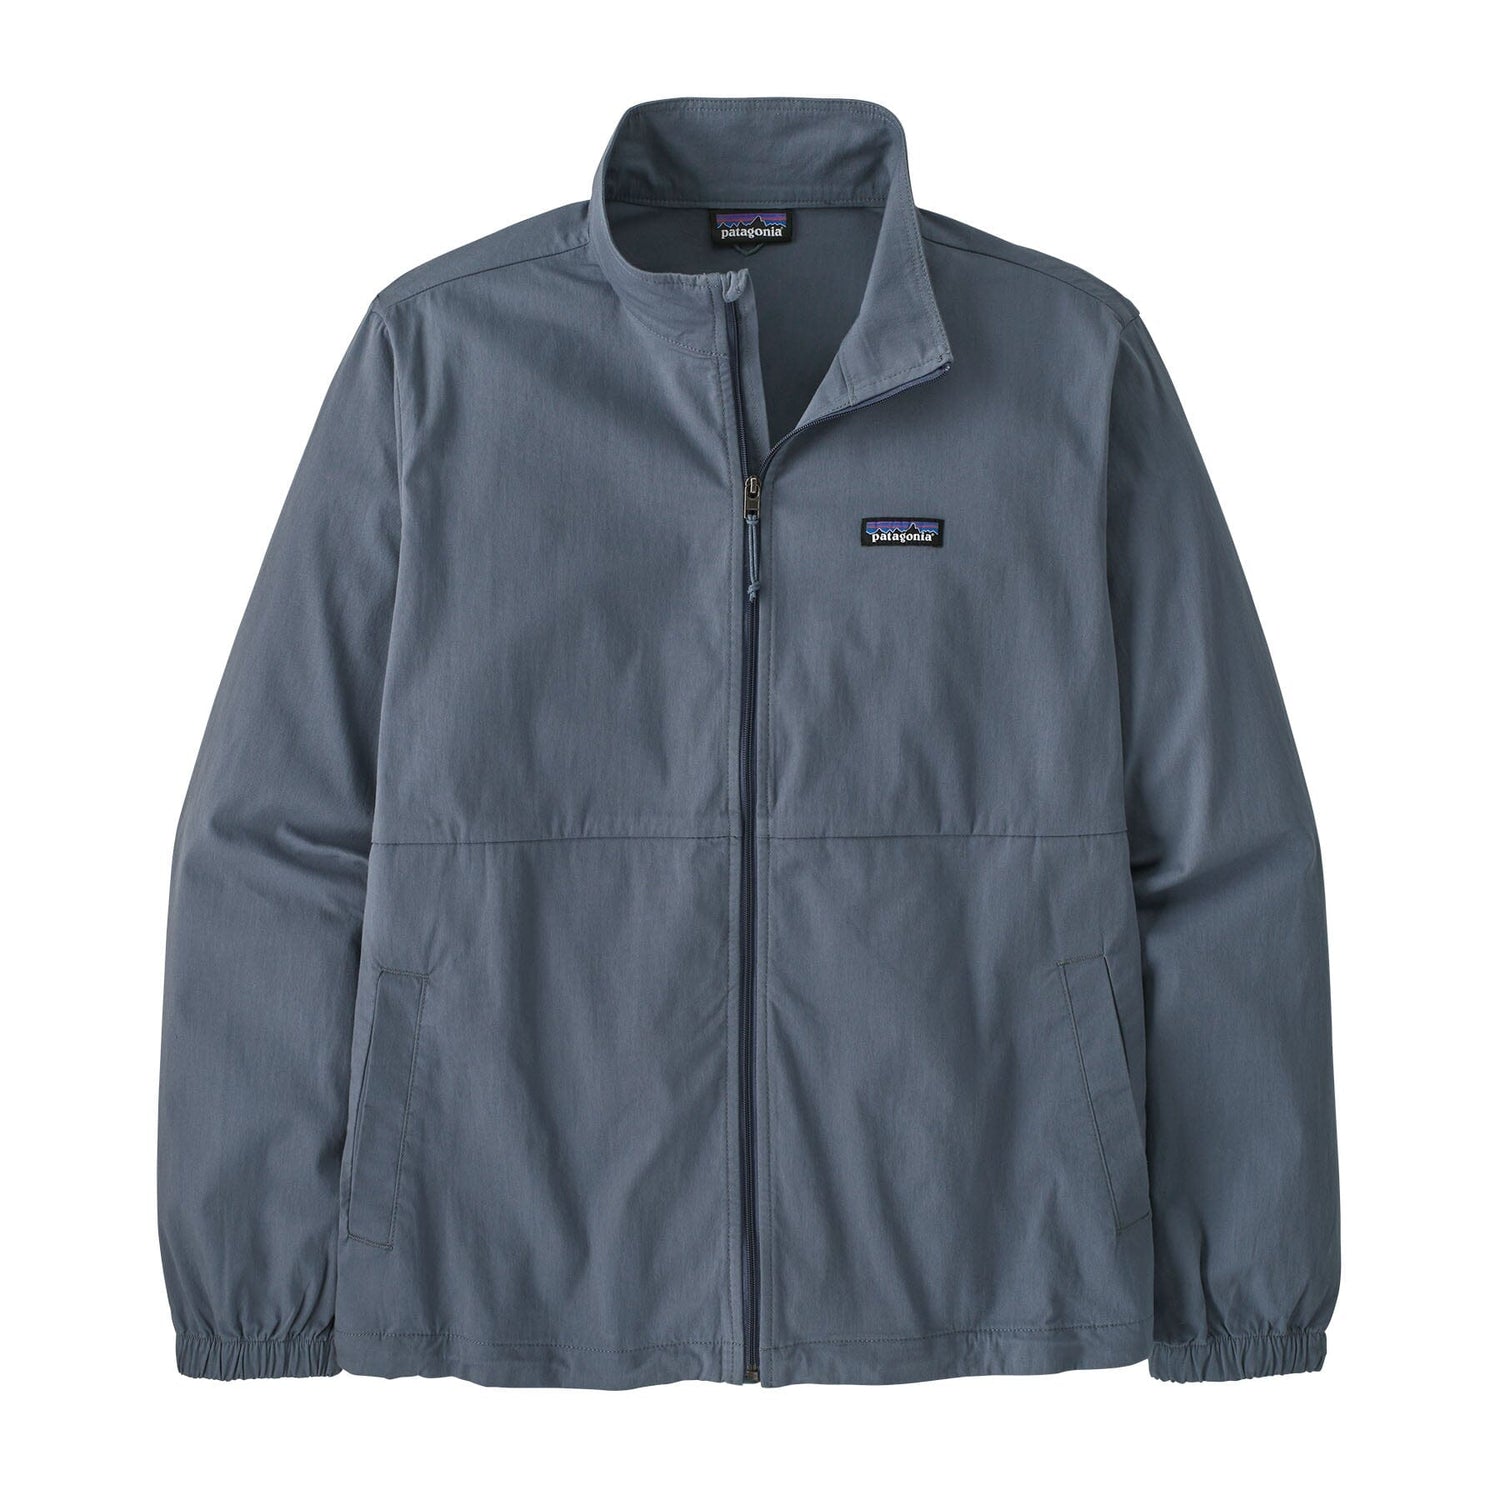 Patagonia - M's Nomader Jacket - Organic cotton & Recycled nylon - Weekendbee - sustainable sportswear